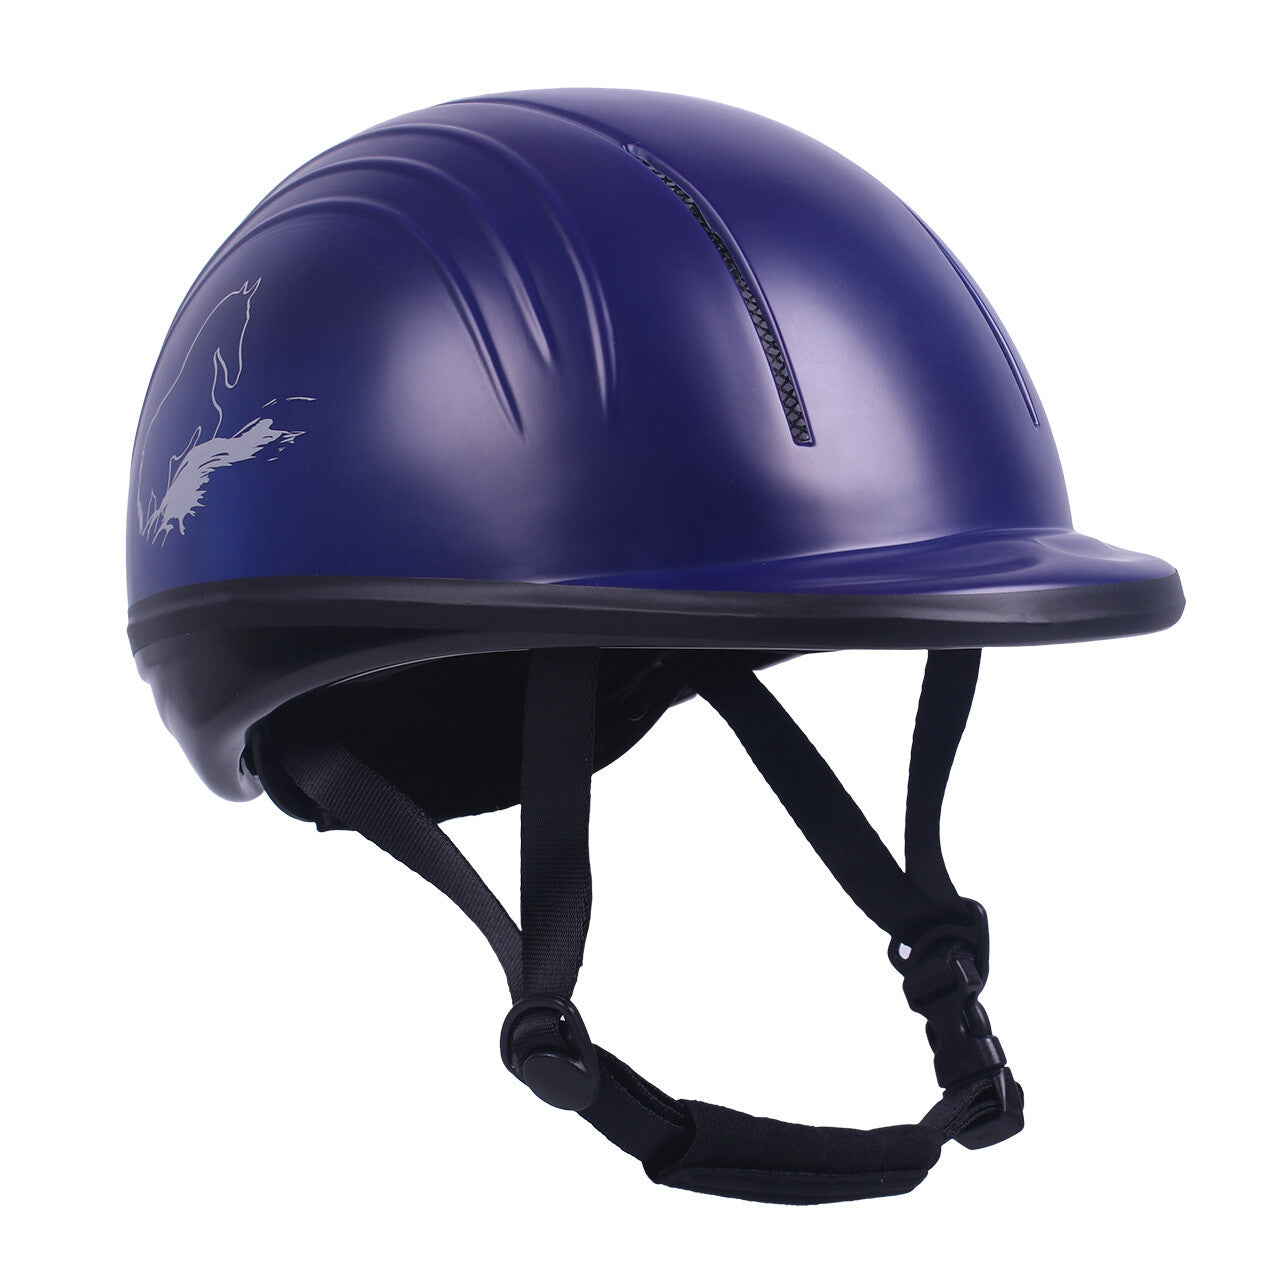 QHP Safety Junior Riding Helmet 53 - 55cm